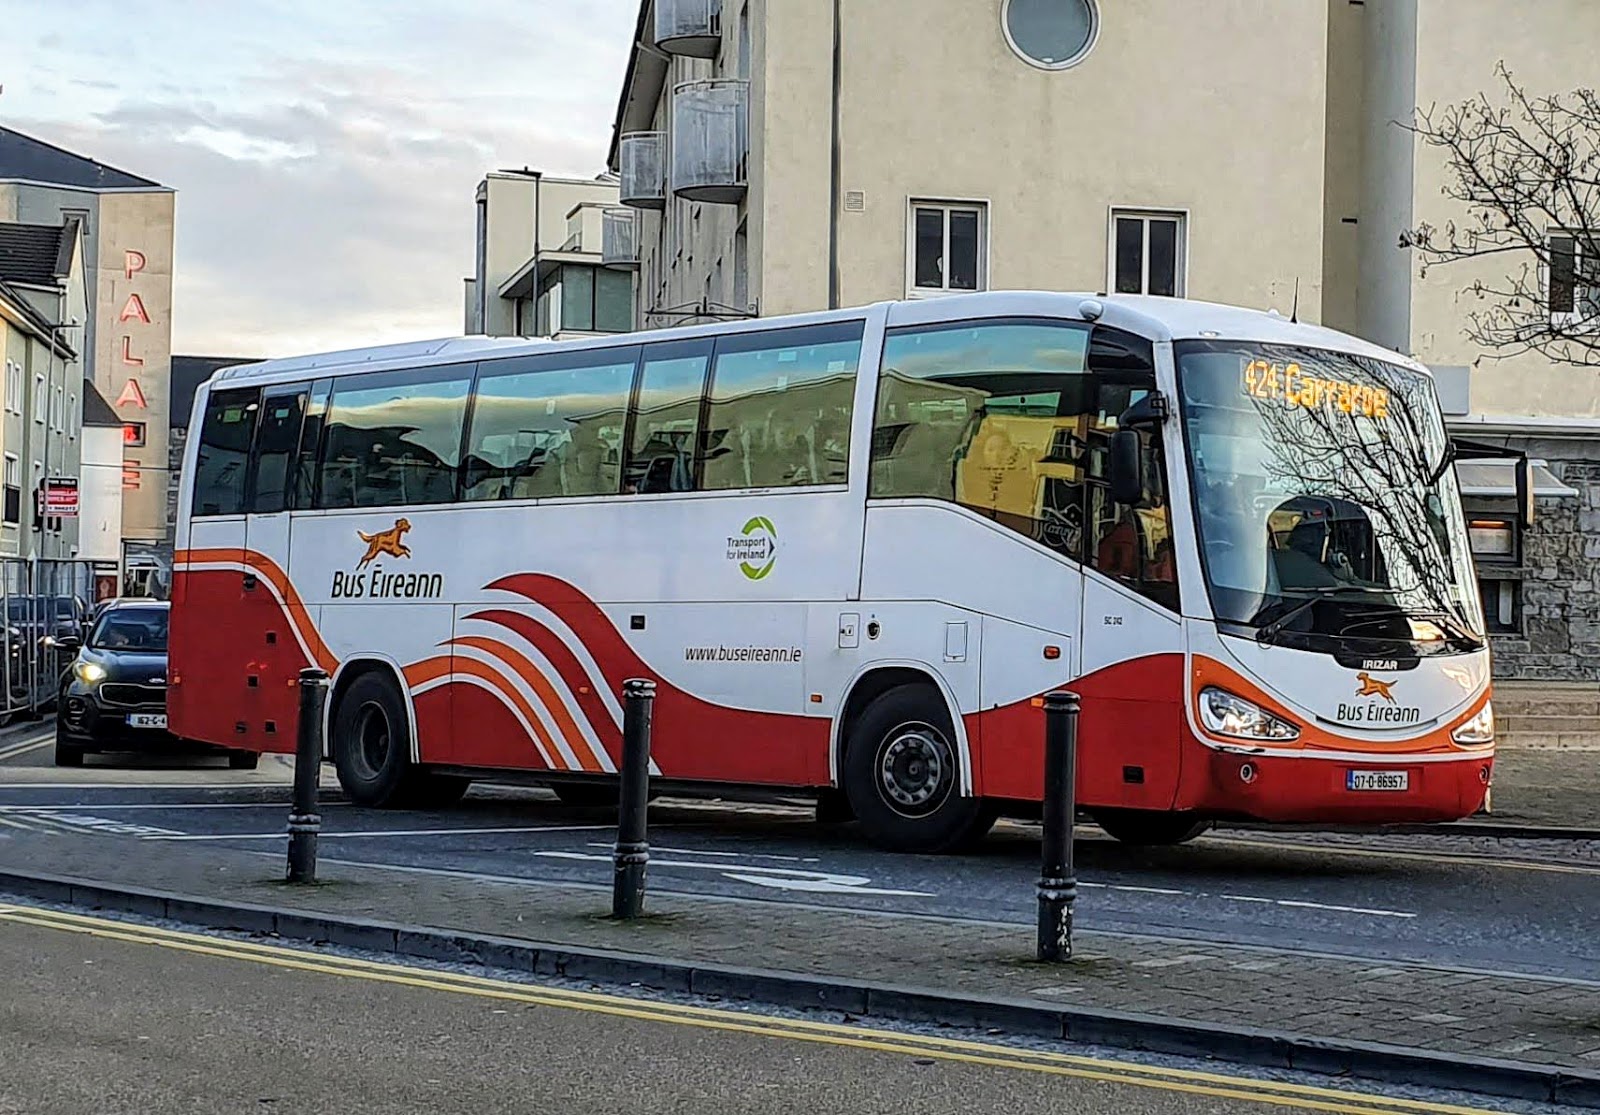 galway-public-transport-news-changes-to-bus-ireann-services-in-connemara